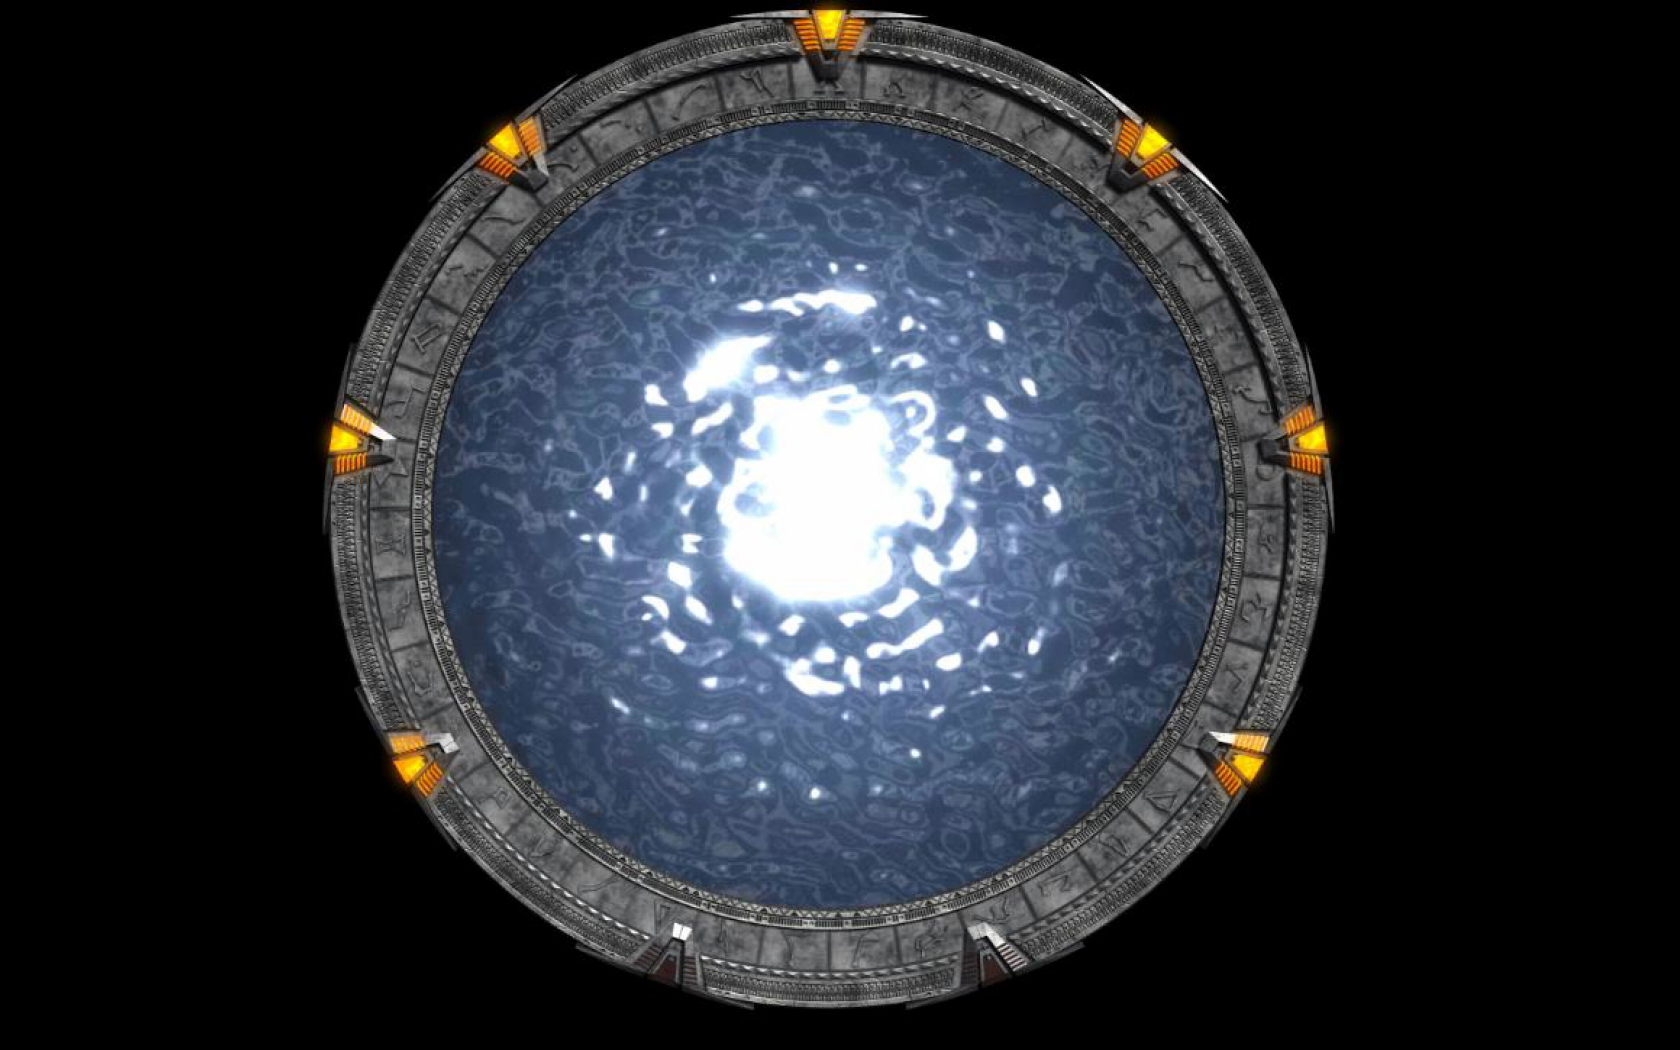 The Stargate - Stargate Wallpaper (8023267) - Fanpop